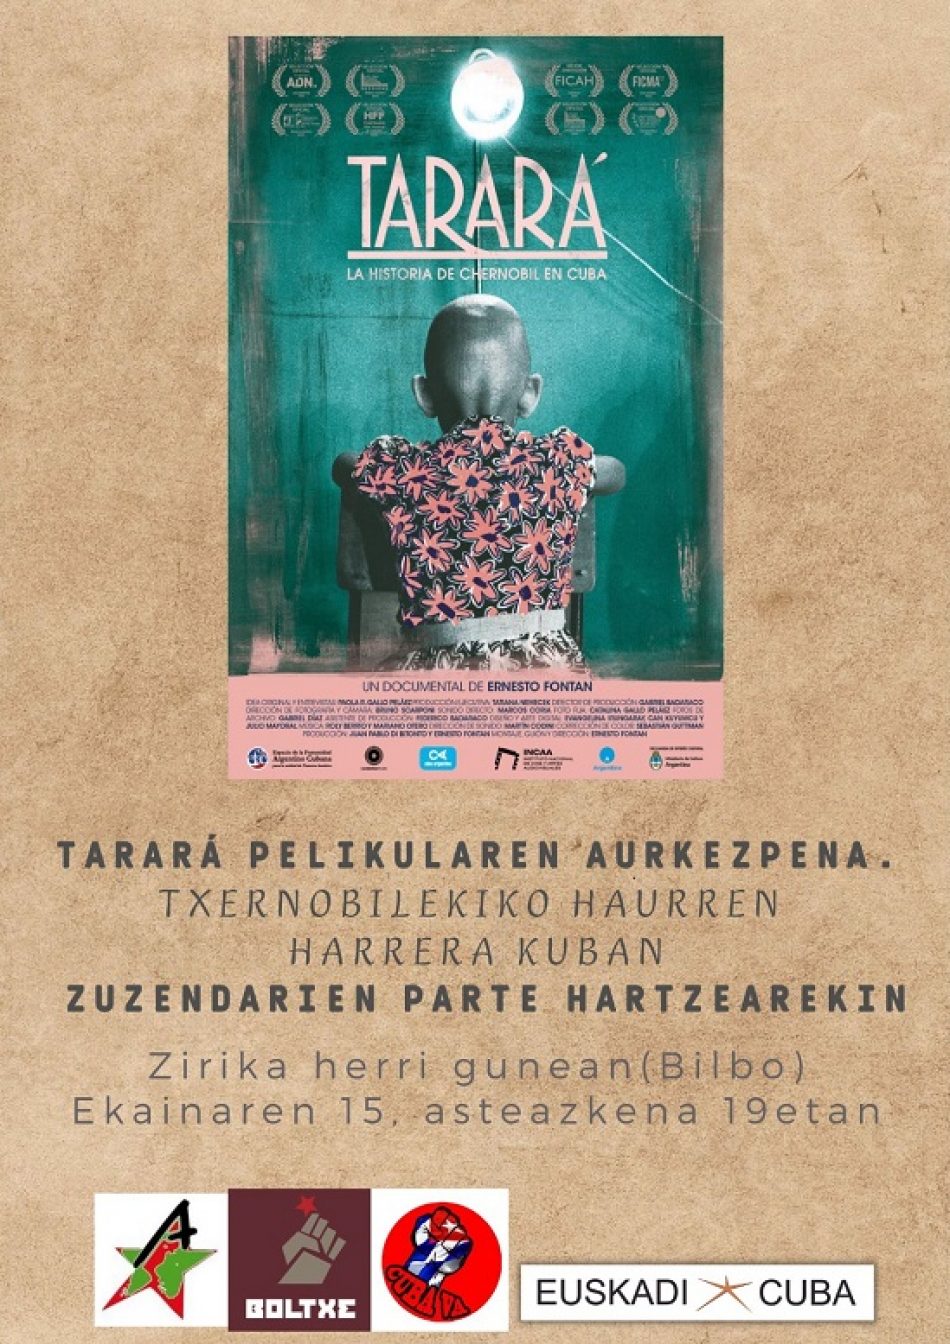 Bilbao,15 de junio: presentarán documental “Tarará, la historia de Chernóbil en Cuba», con Ernesto Fontán y Tatiana Nemecek